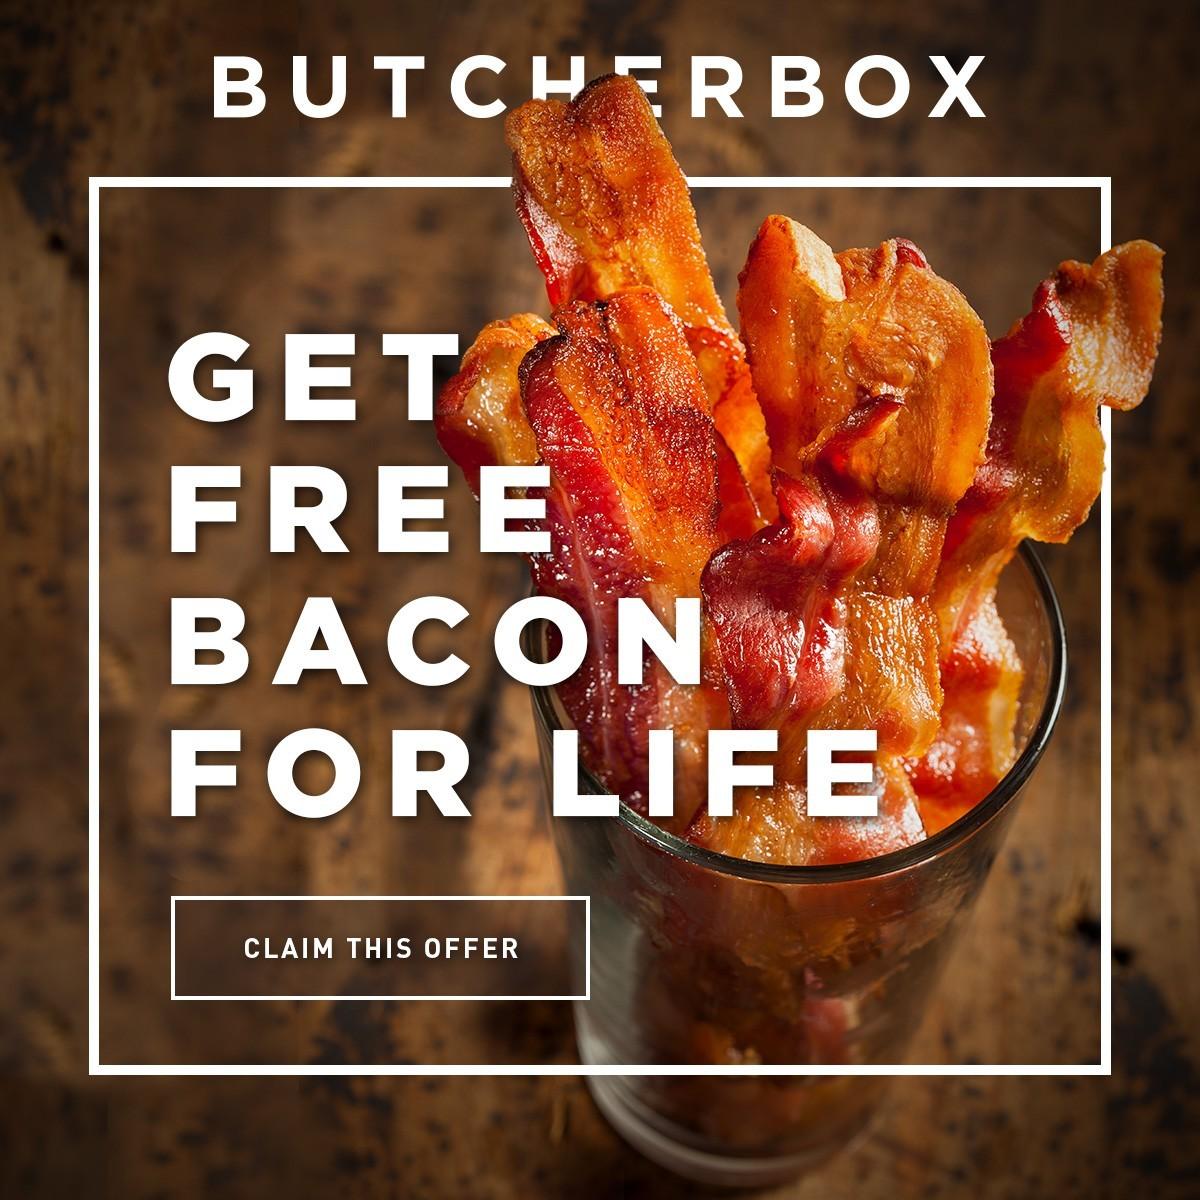 Butcherbox Coupon Code – Free Bacon for Life!